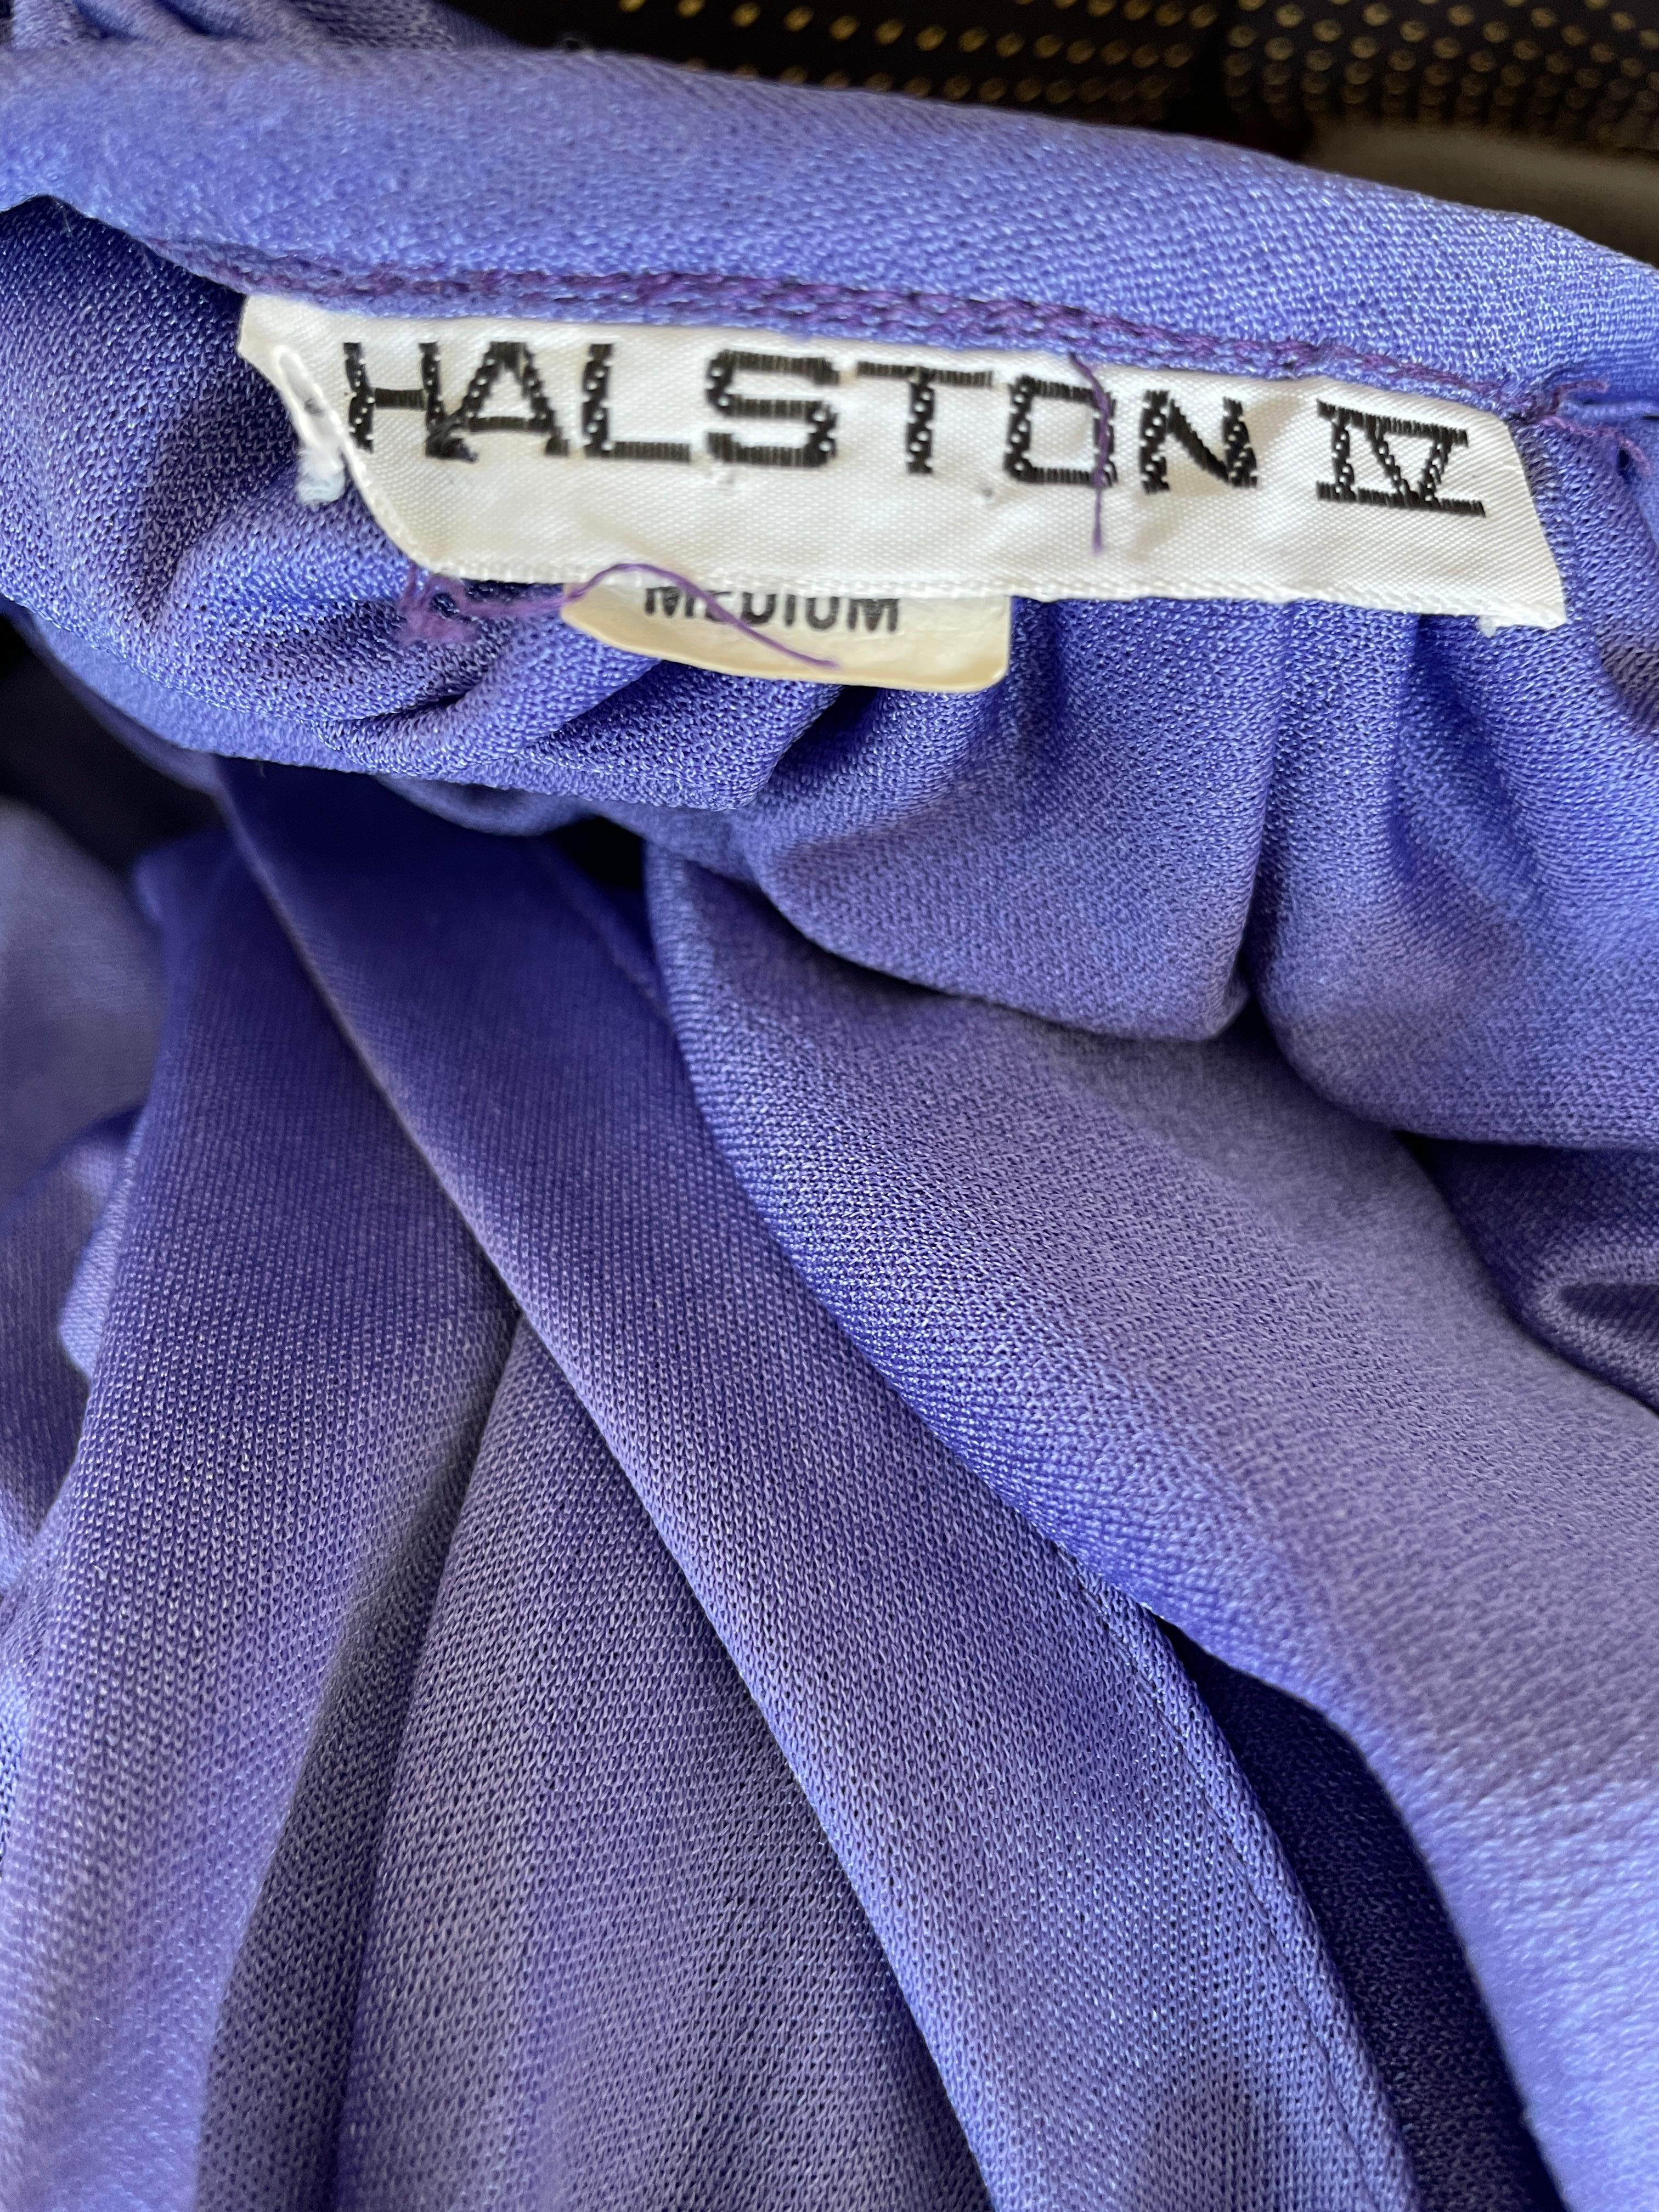 Halston 1980's Purple Caftan Dress from Halston IV 6